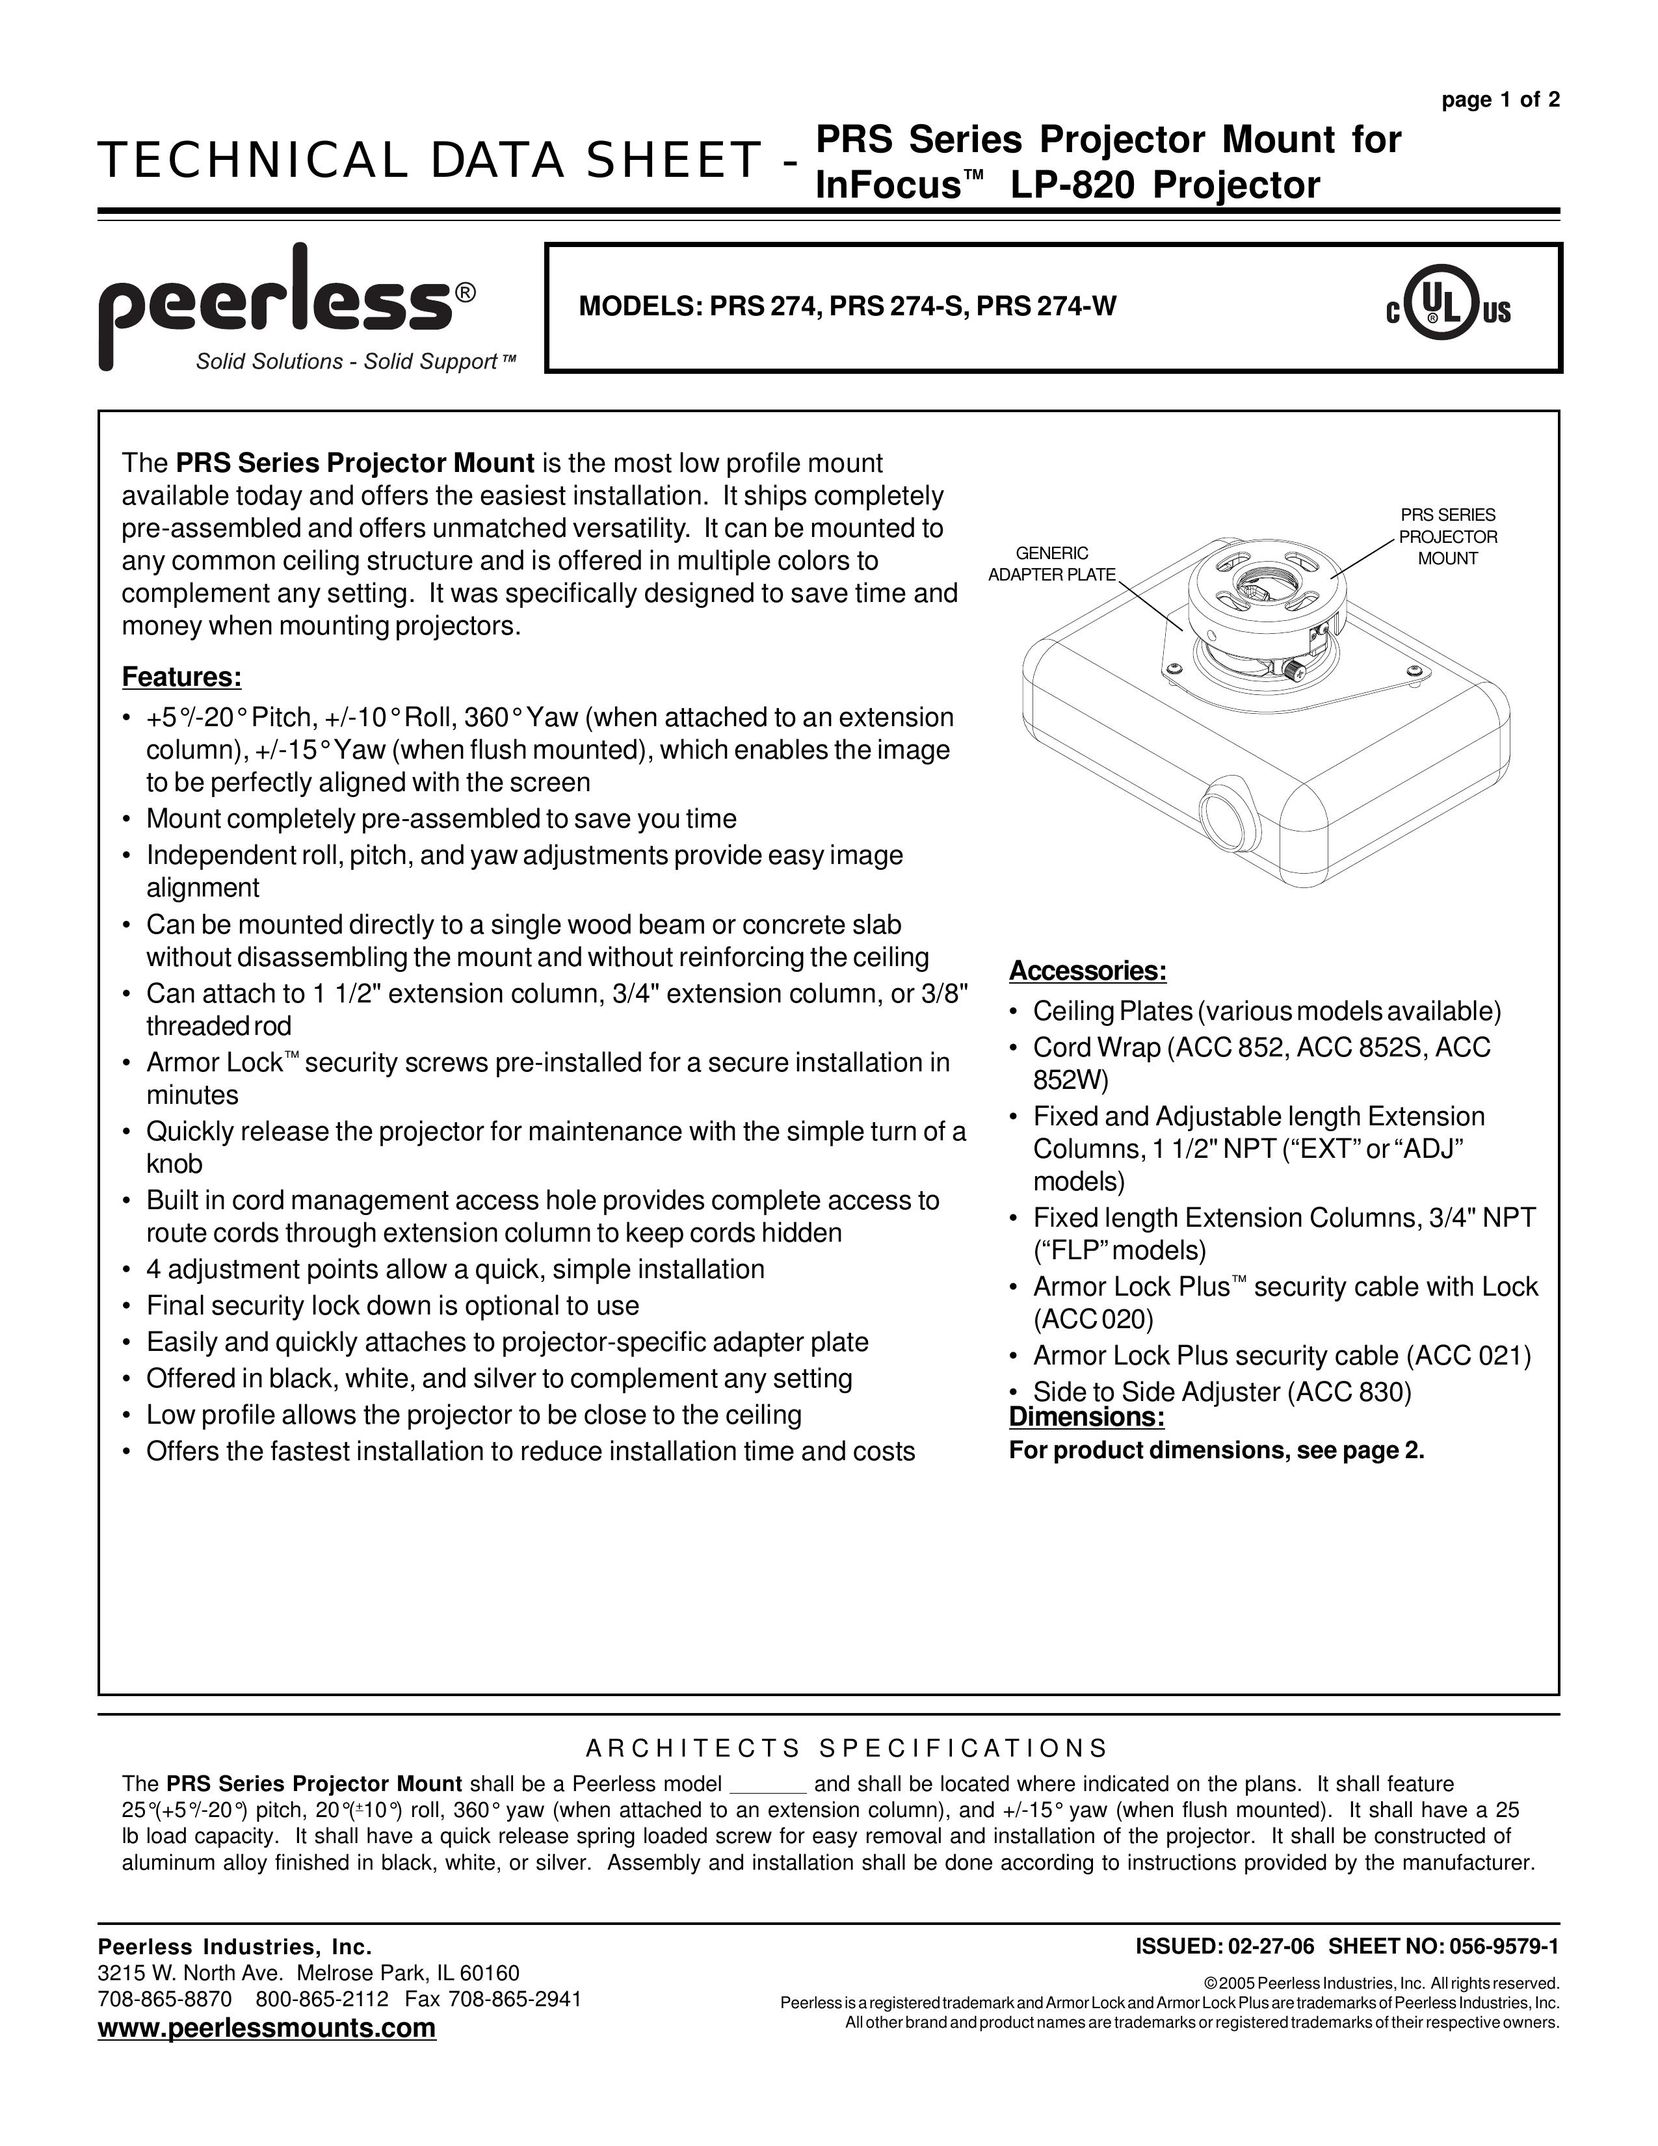 Peerless Industries PRS 274 Projector Accessories User Manual